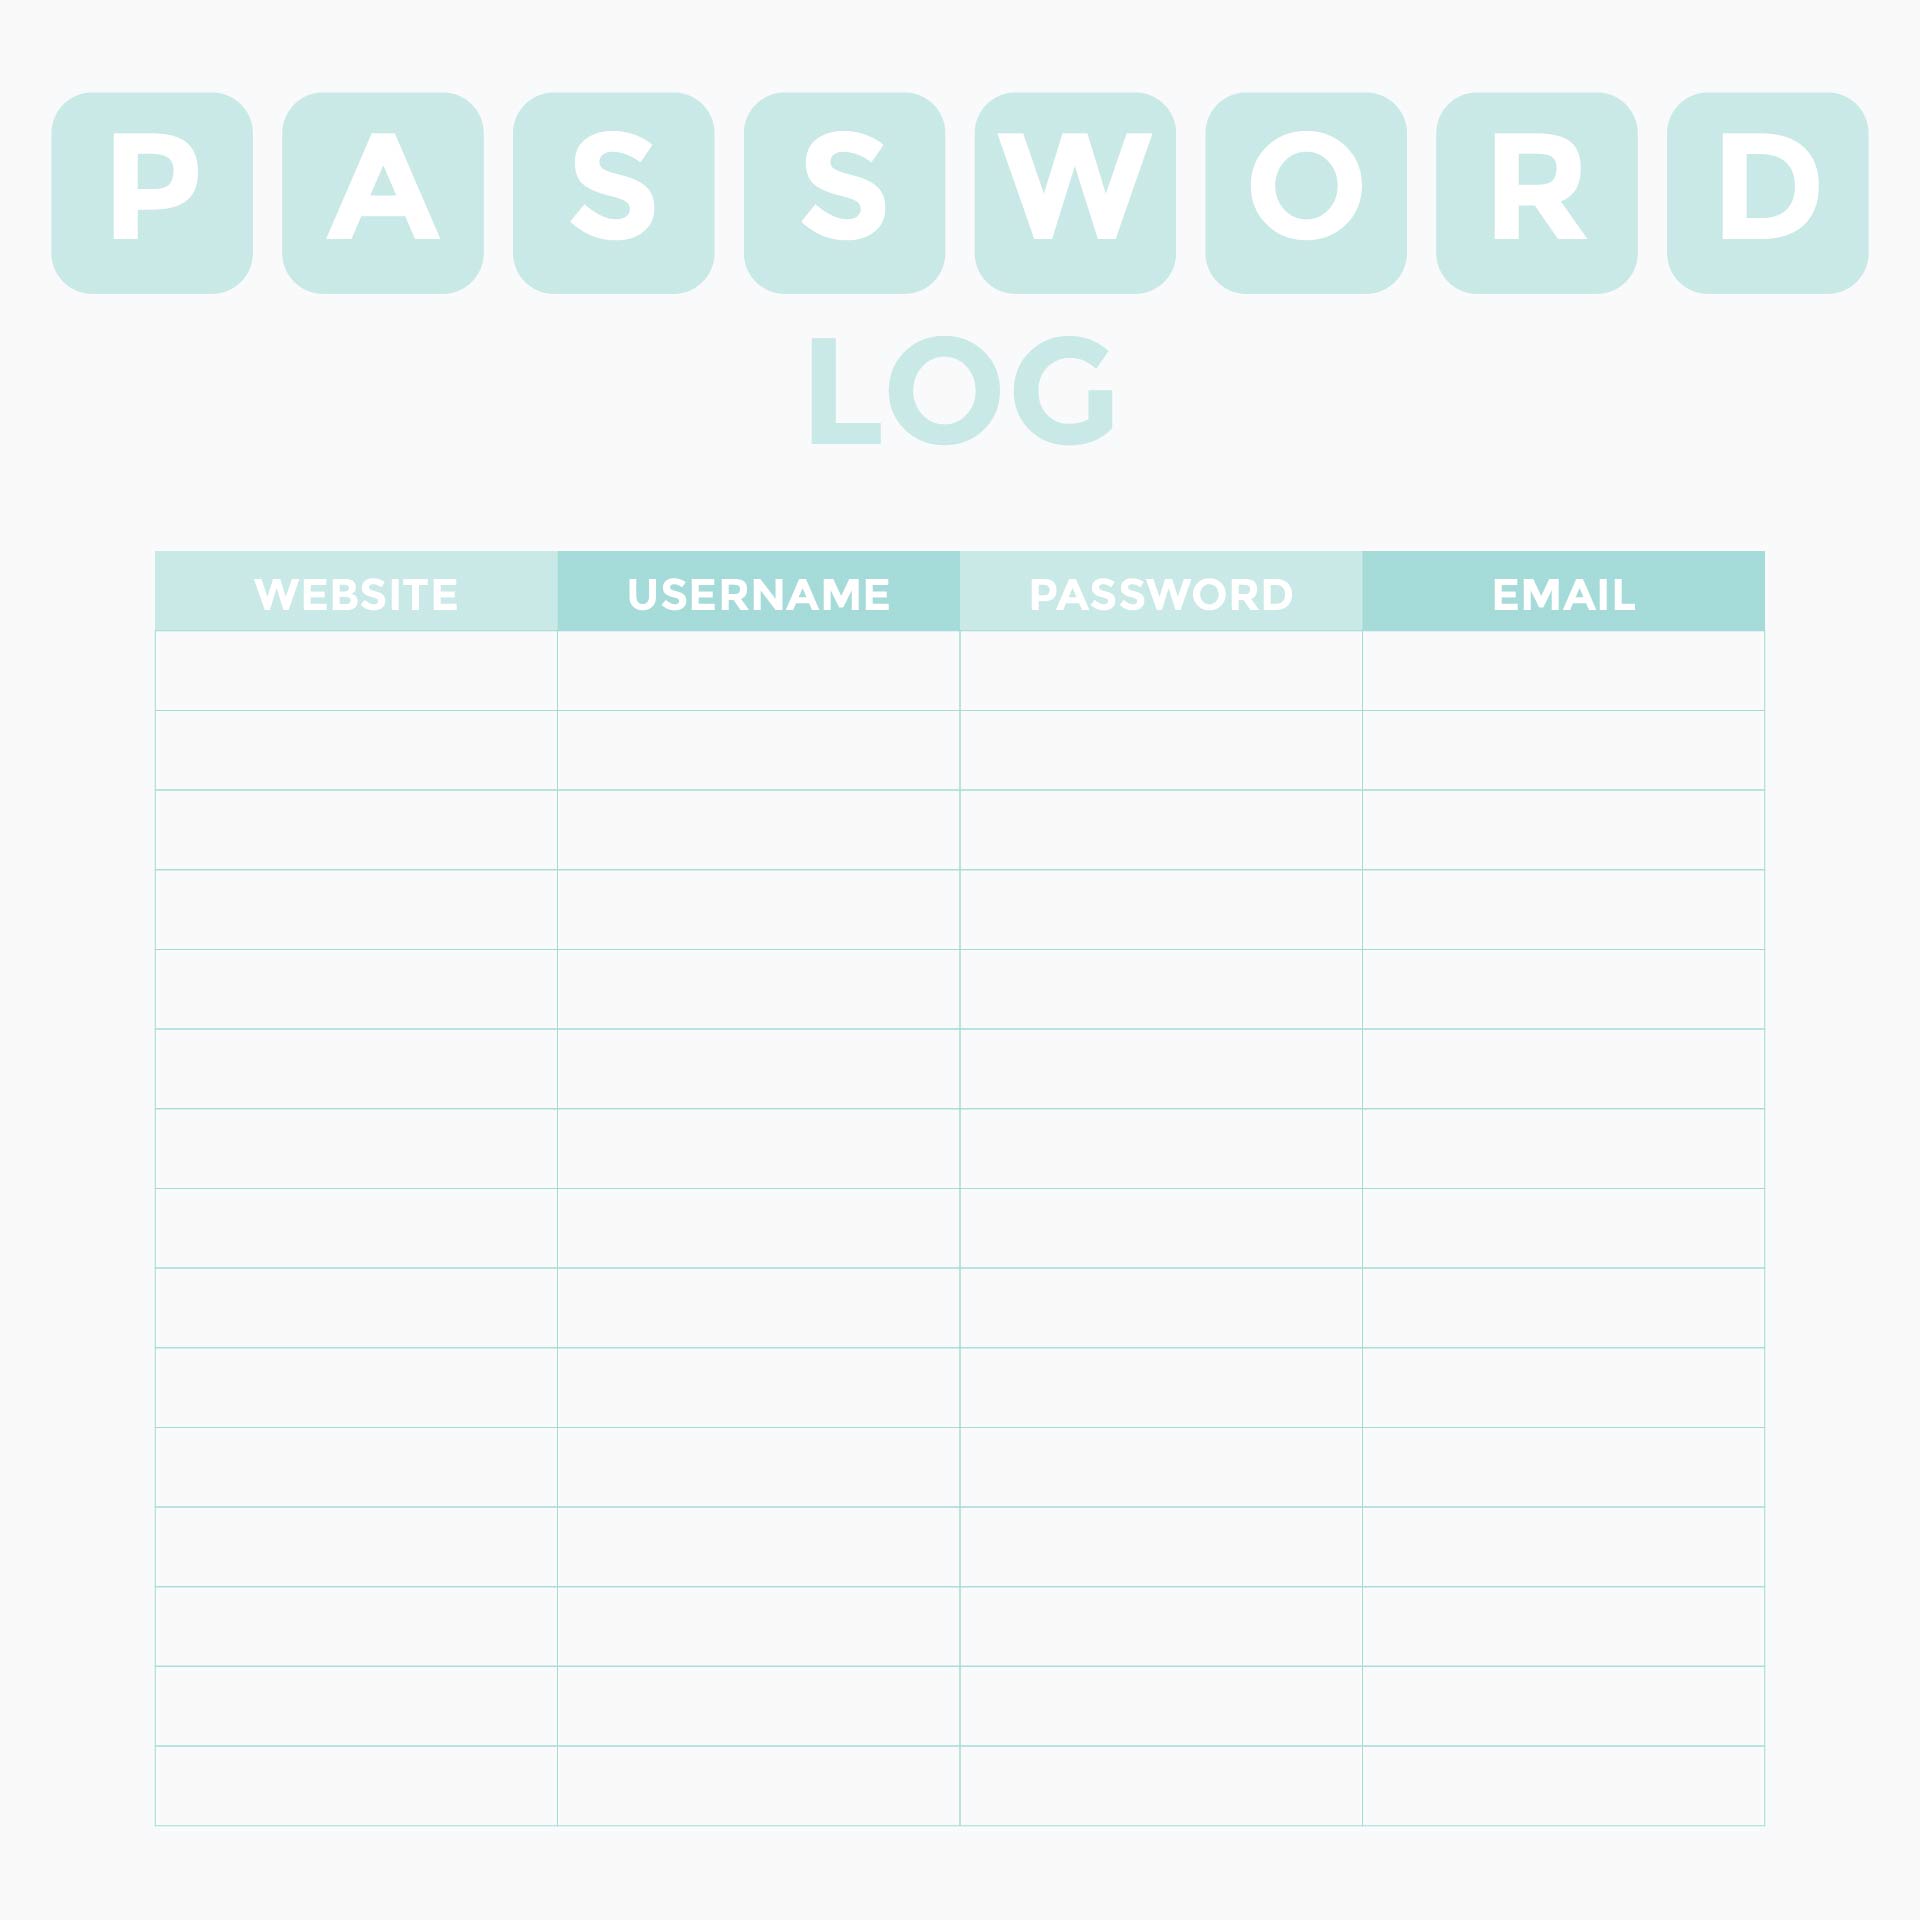 Printable Password Log Sheets